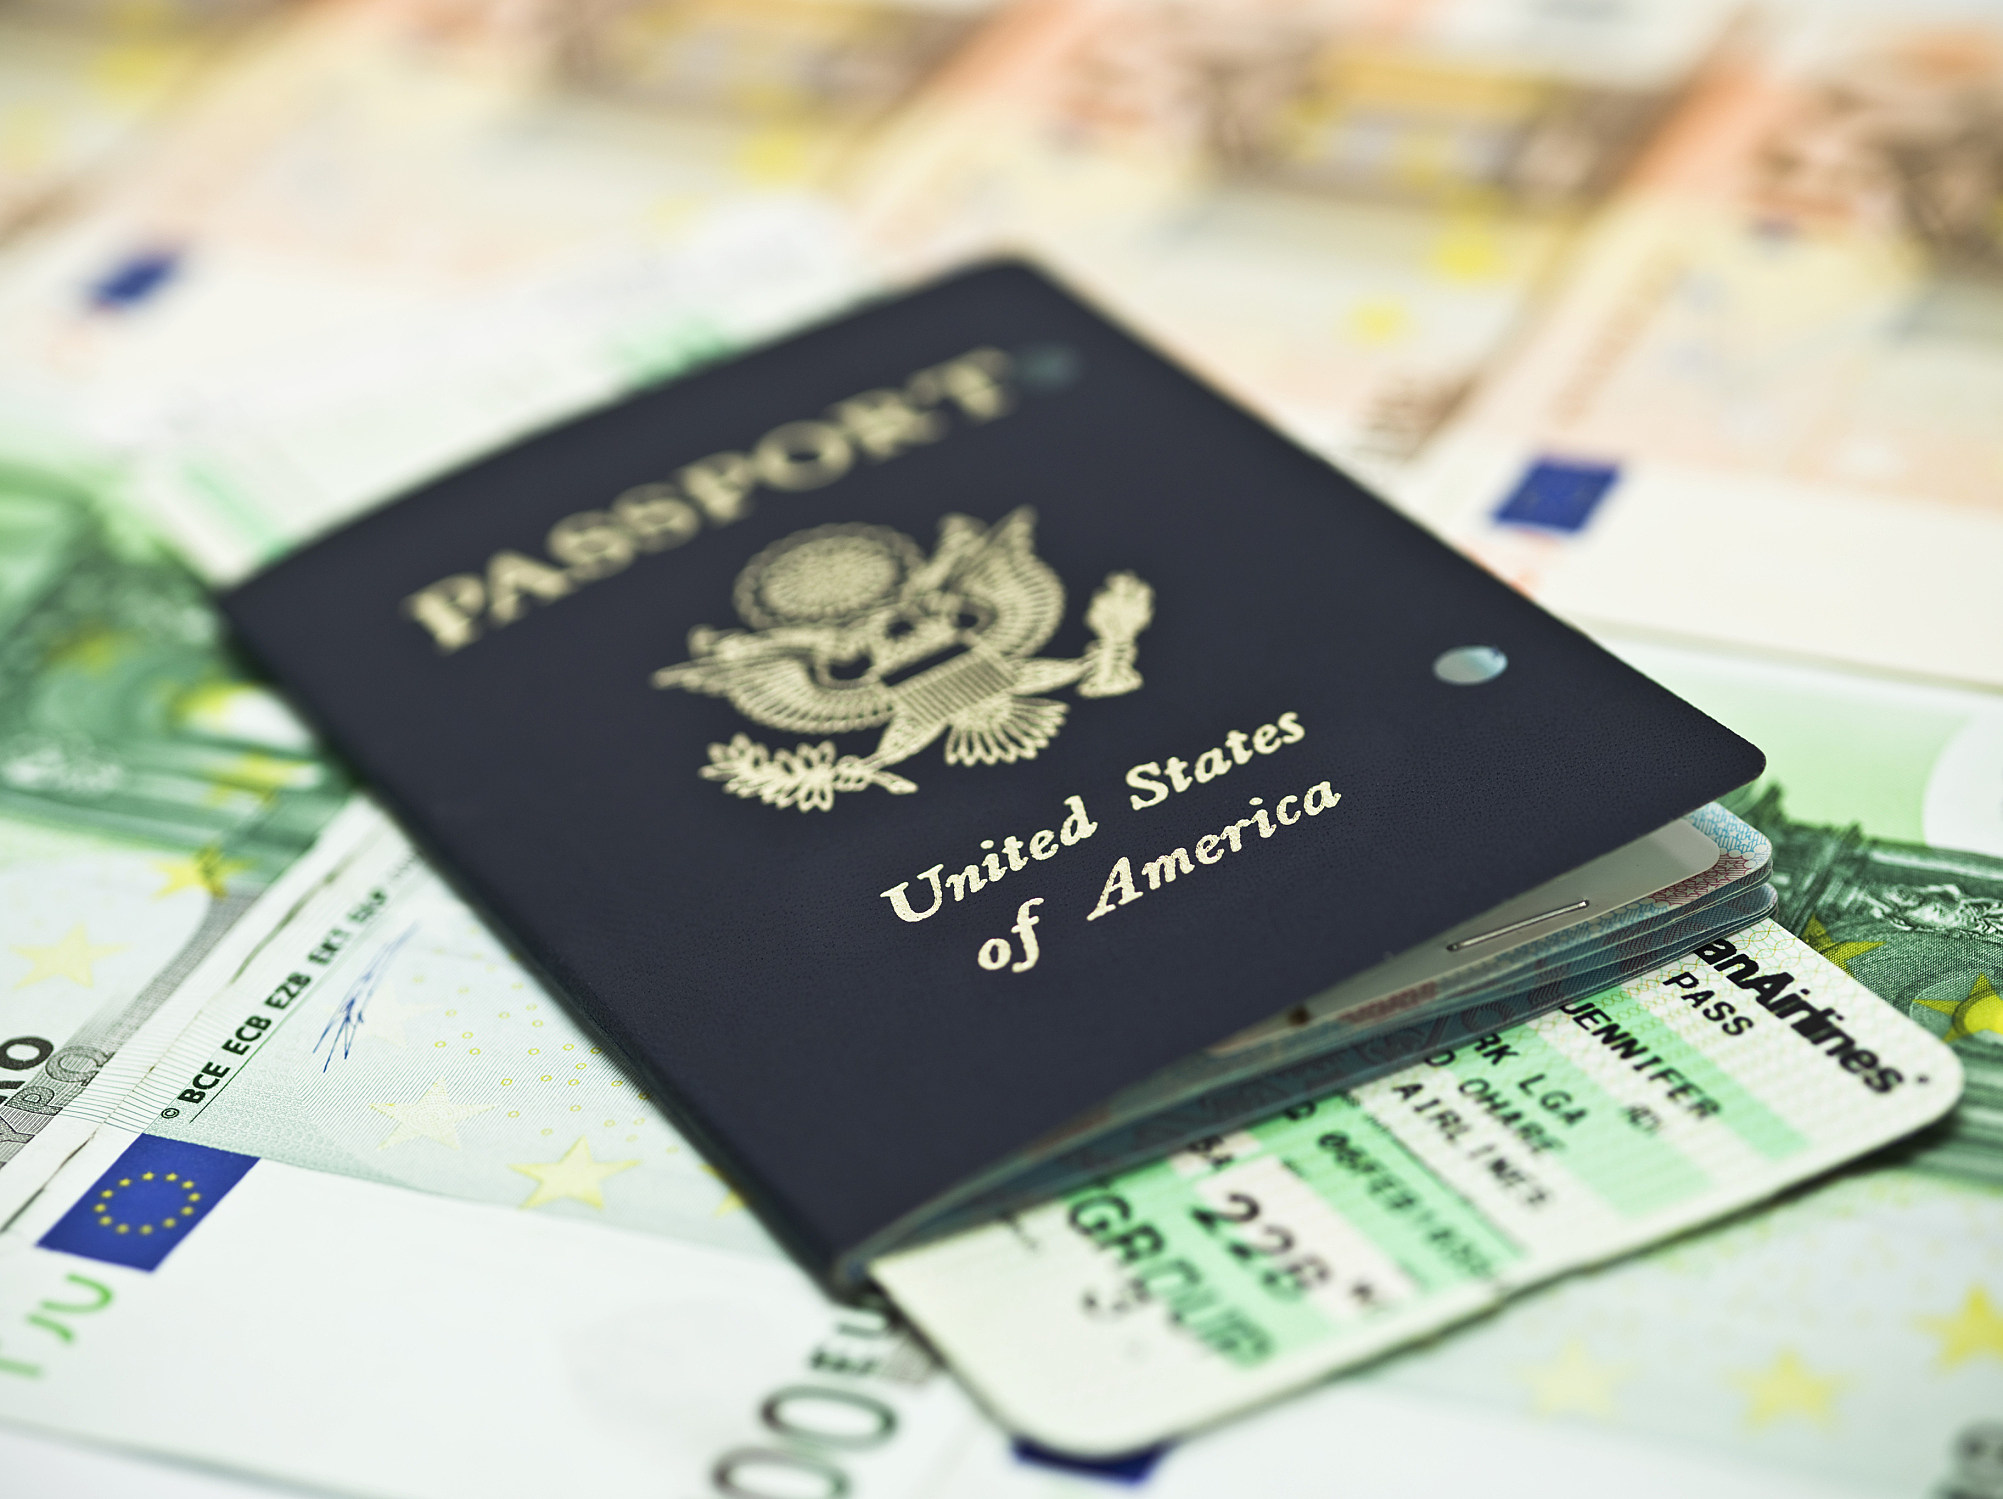 newport nc usps passport appointment scheduler